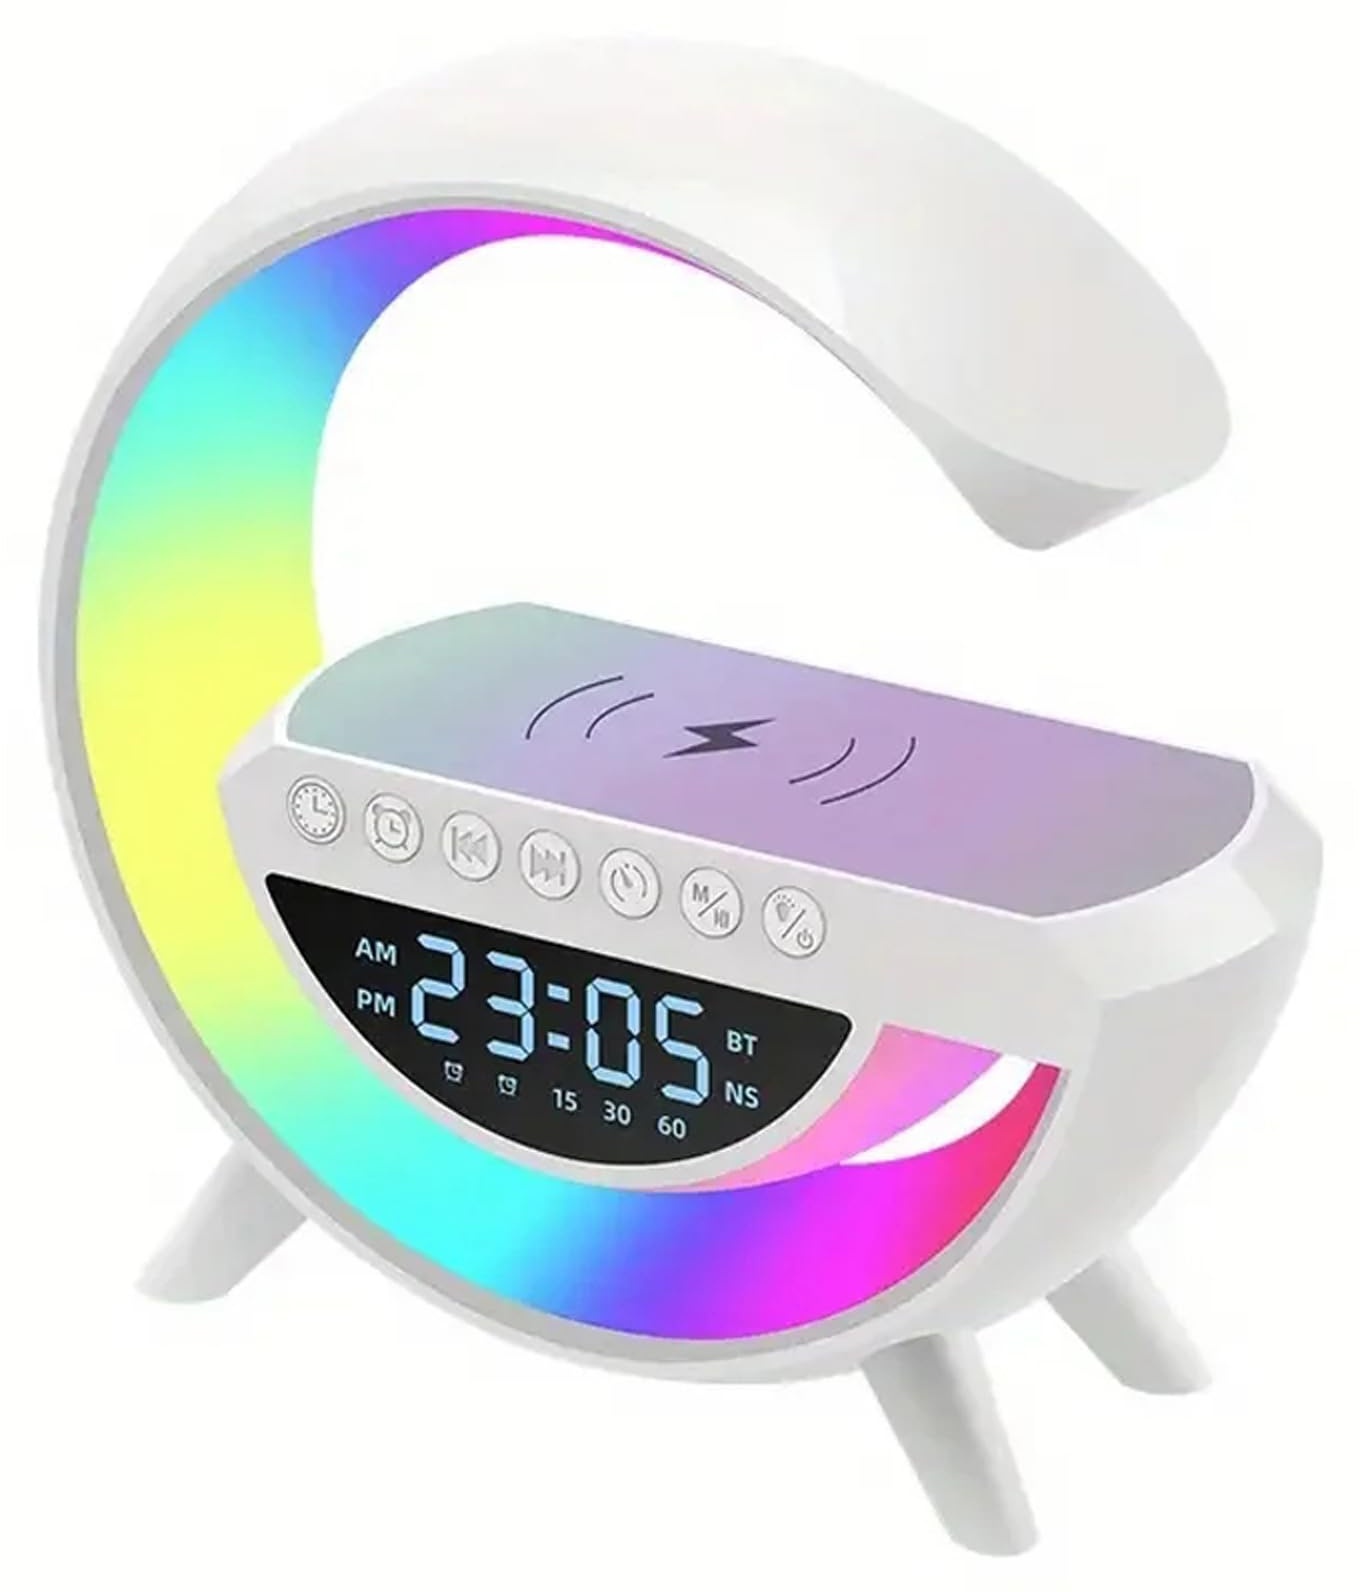 Multifunctional Bluetooth Speaker-Colorful Atmosphere Light Wireless Charging and Clock, LED Nachttischlampe Mit Kabellosem Ladegerät, Bluetooth Lautsprecher, AtmosphäRenlampe Tischlampe (Wecker)